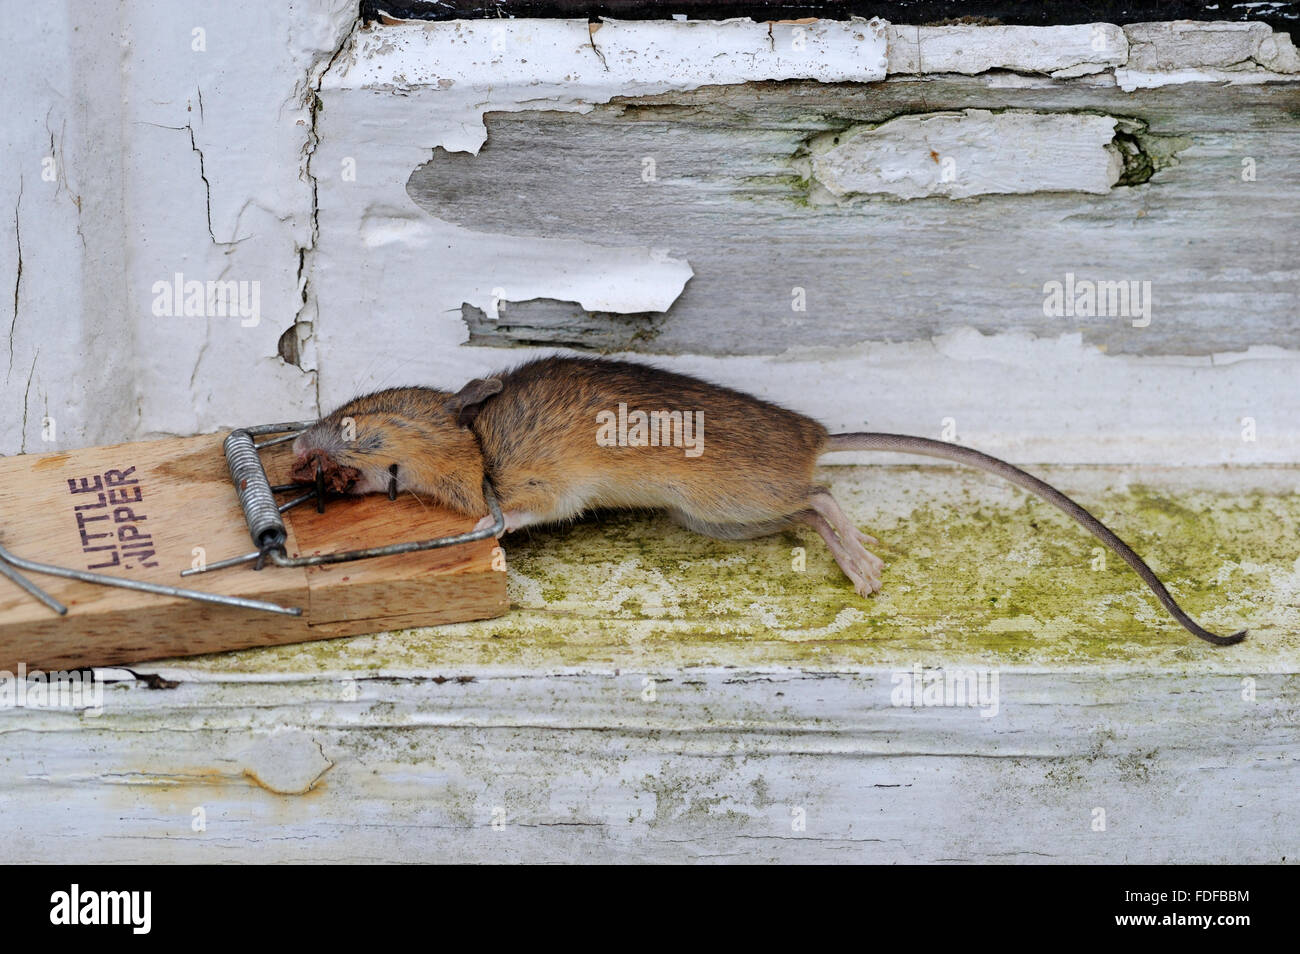 https://c8.alamy.com/comp/FDFBBM/dead-house-mouse-caught-in-trap-bentley-suffolk-dec-2014-FDFBBM.jpg